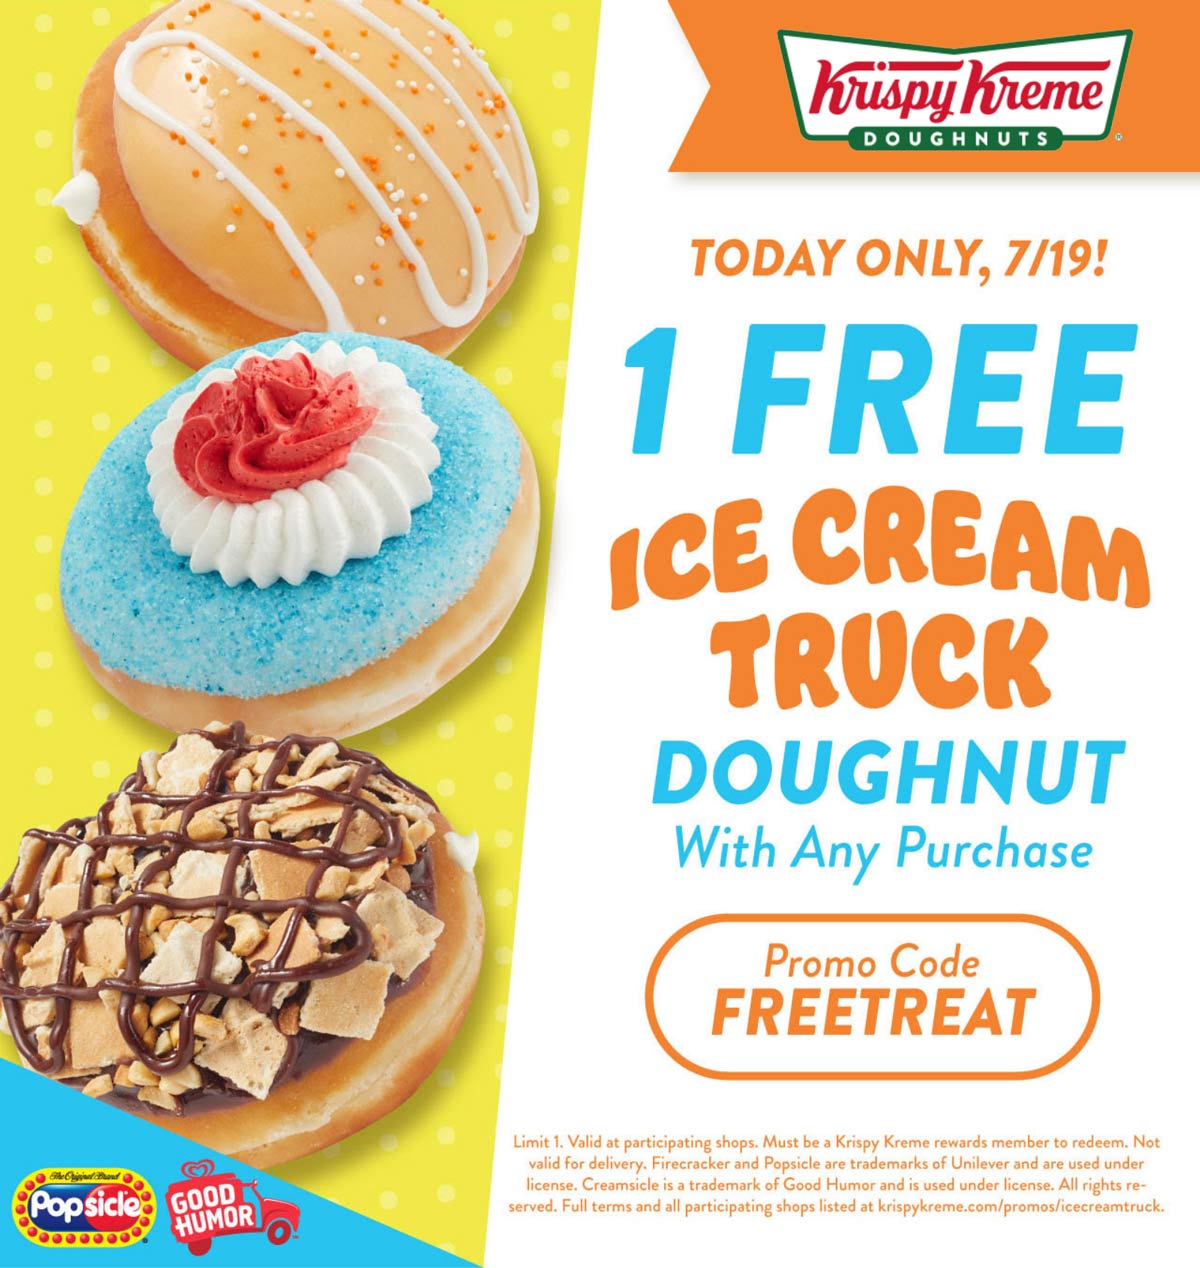 Krispy Kreme restaurants Coupon  Free ice cream truck doughnut with any purchase today at Krispy Kreme via promo code FREETREAT #krispykreme 